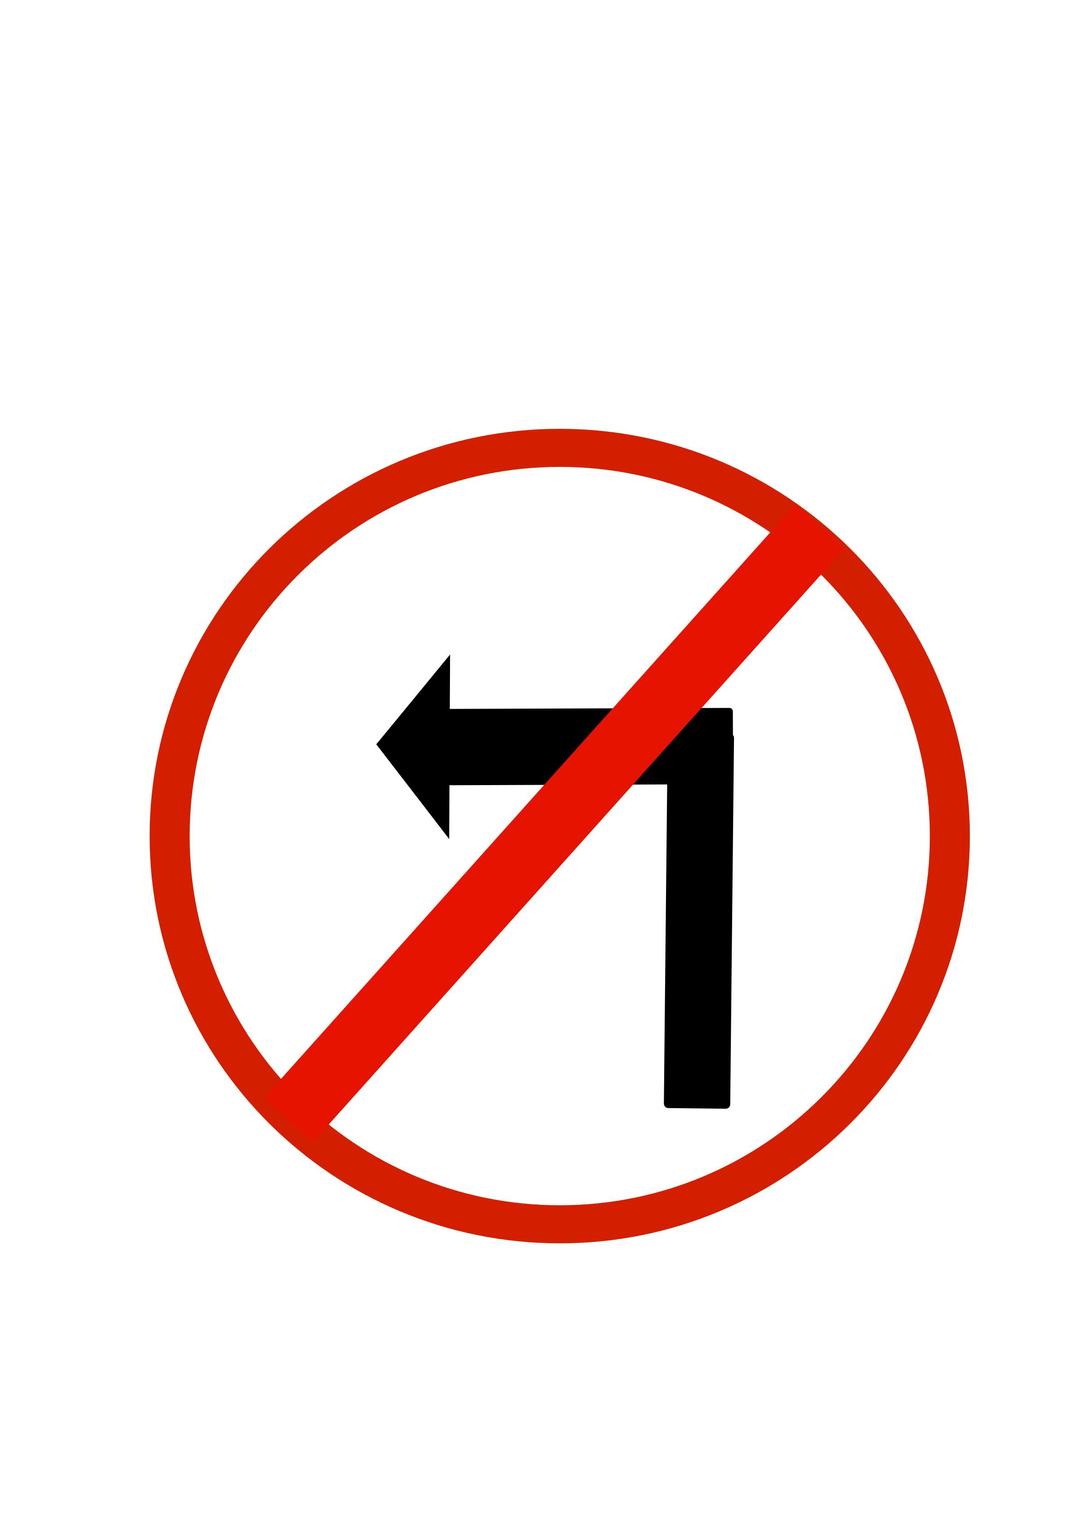 Indian road sign - Left turn prohibited png transparent